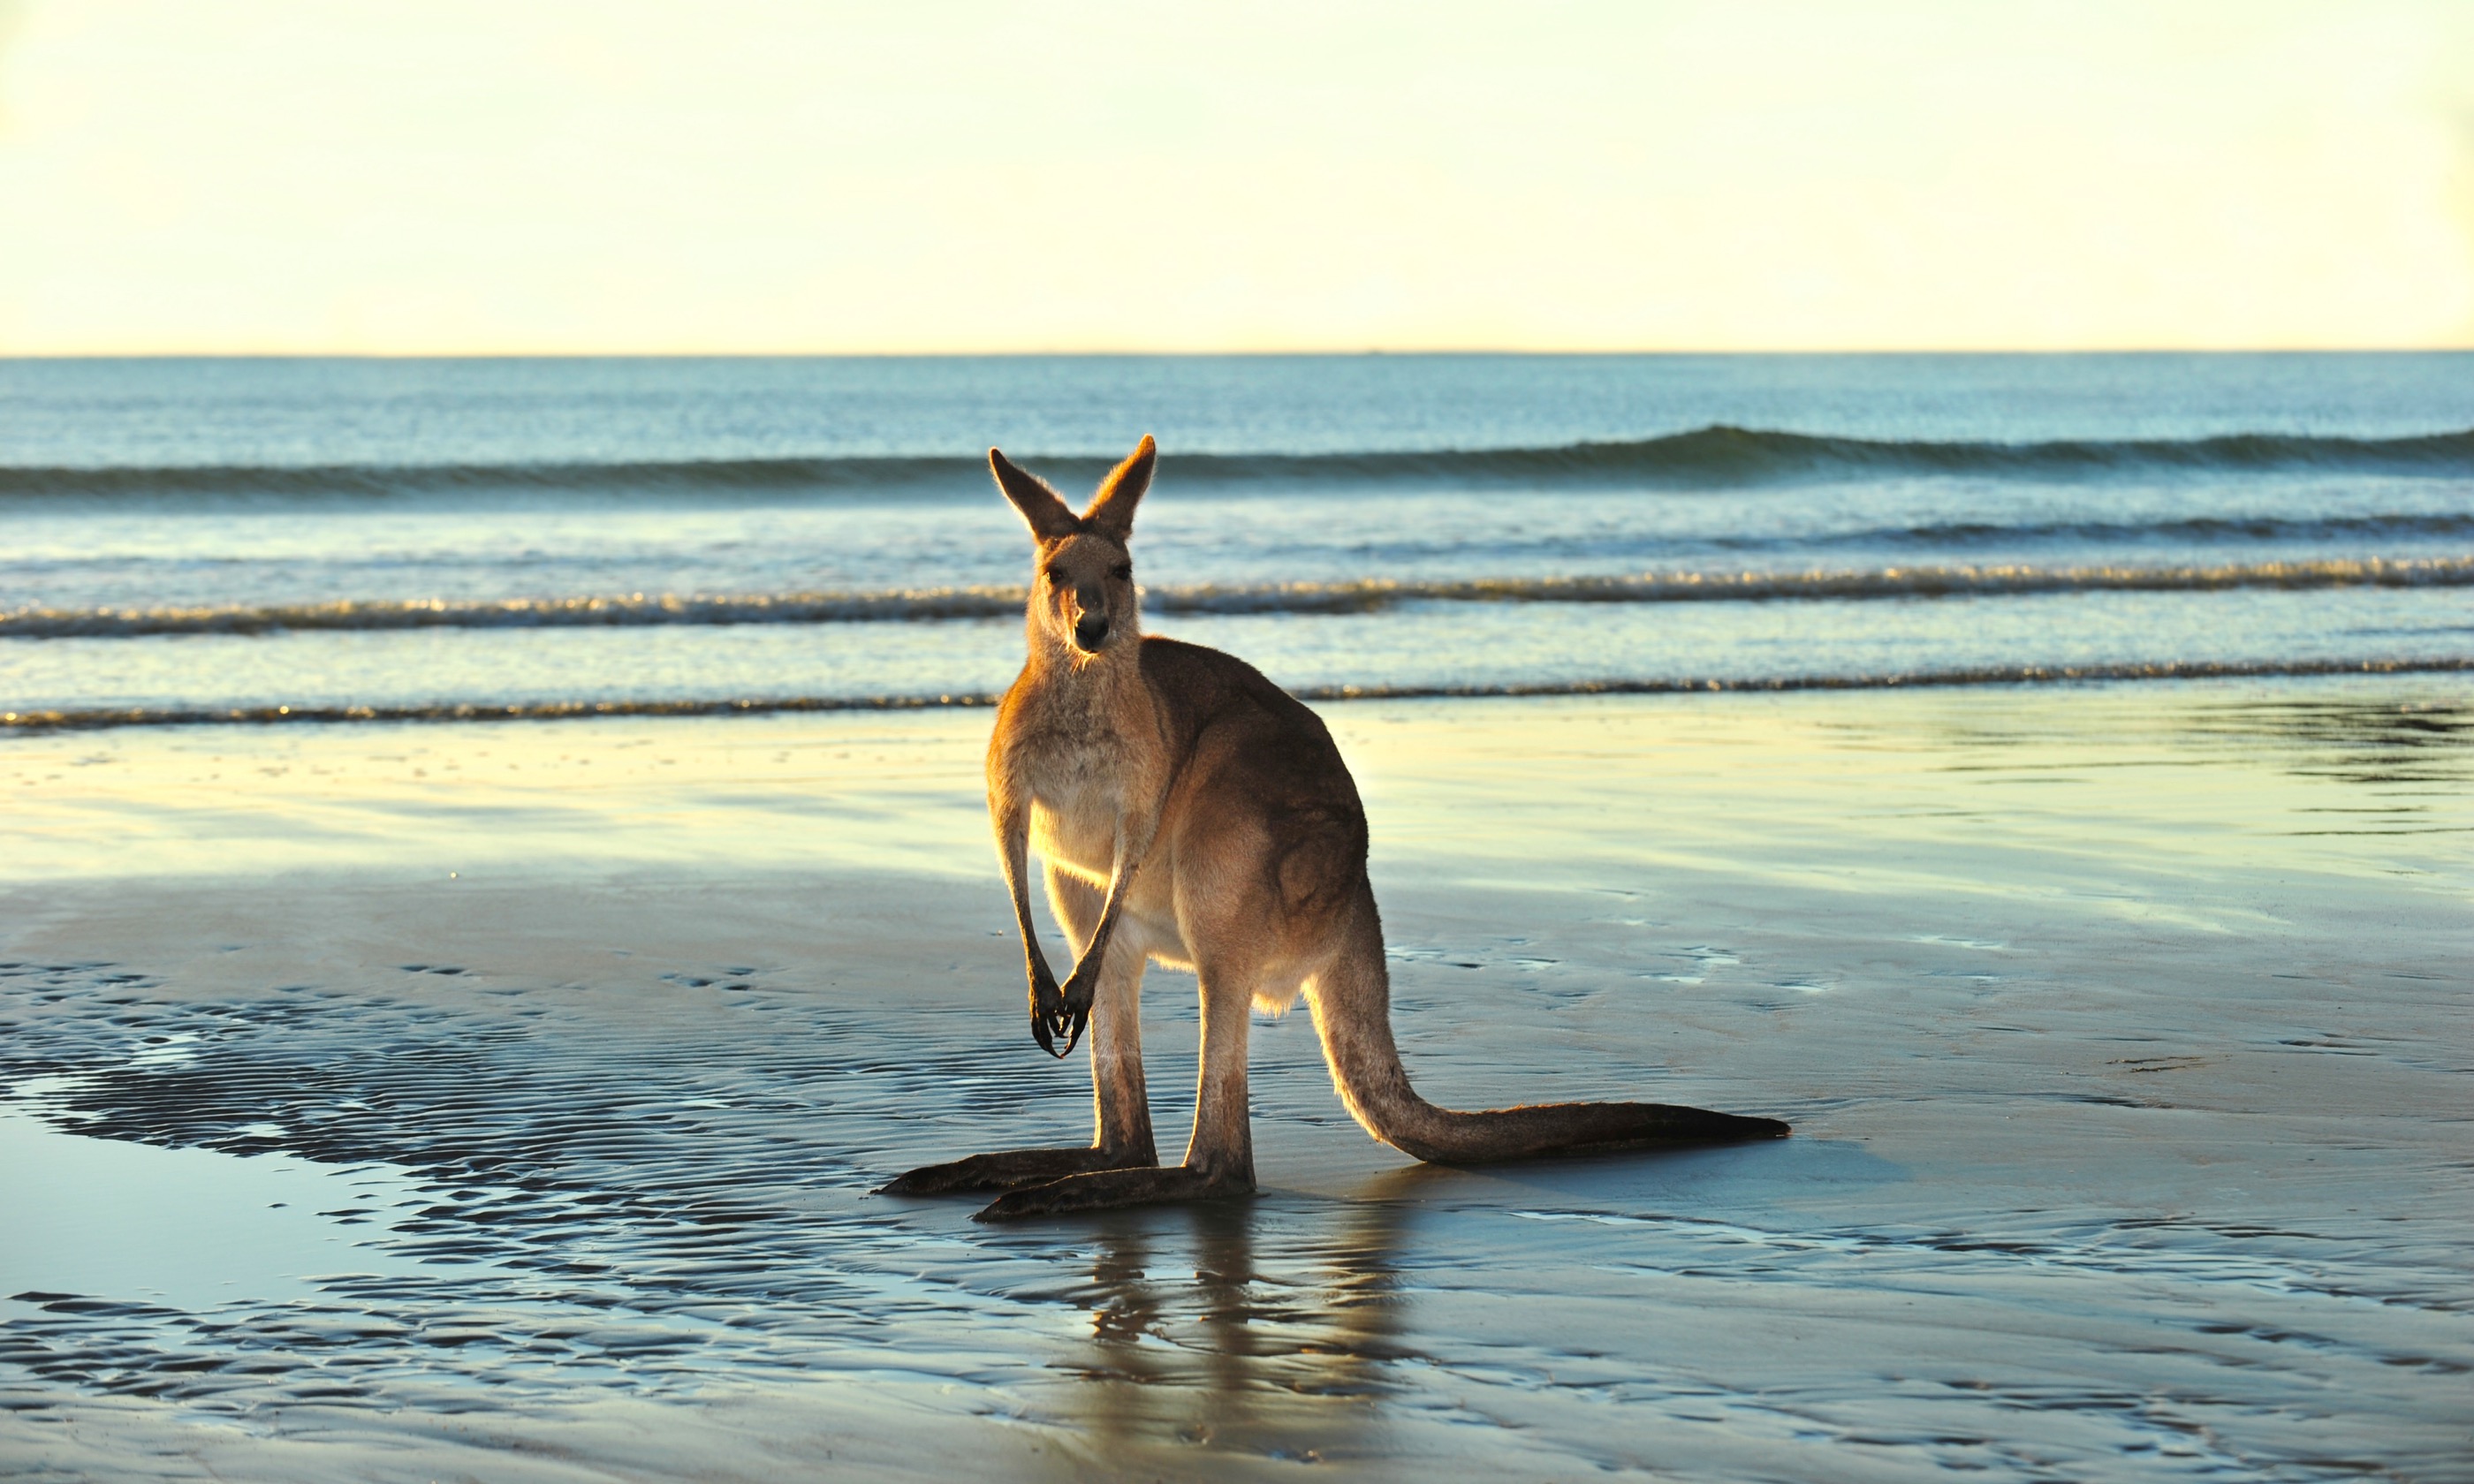 Eastern Gret Kangaroo on the beach near Mackay (Shutterstock.com. See main credit below)